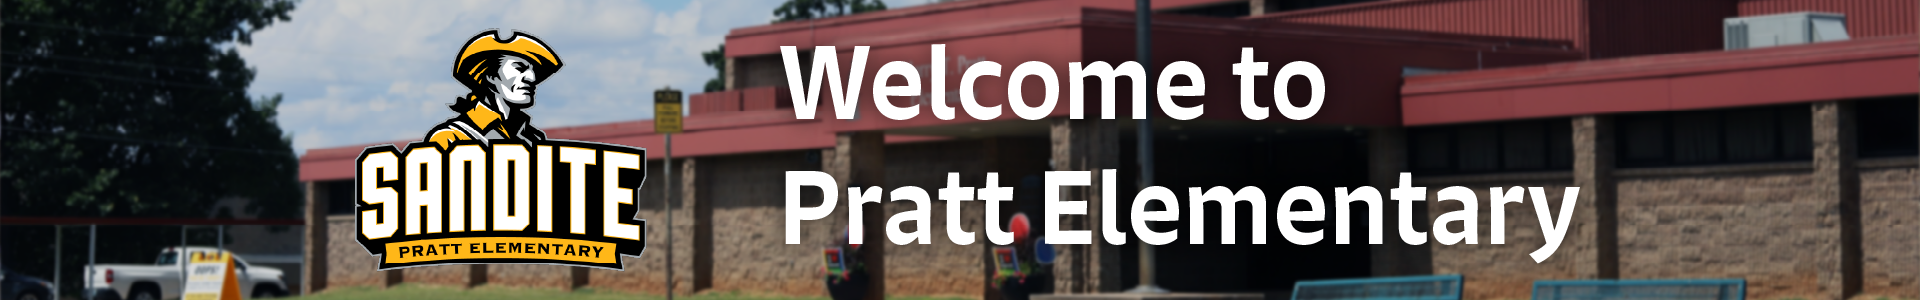 Welcome to Pratt Elementary